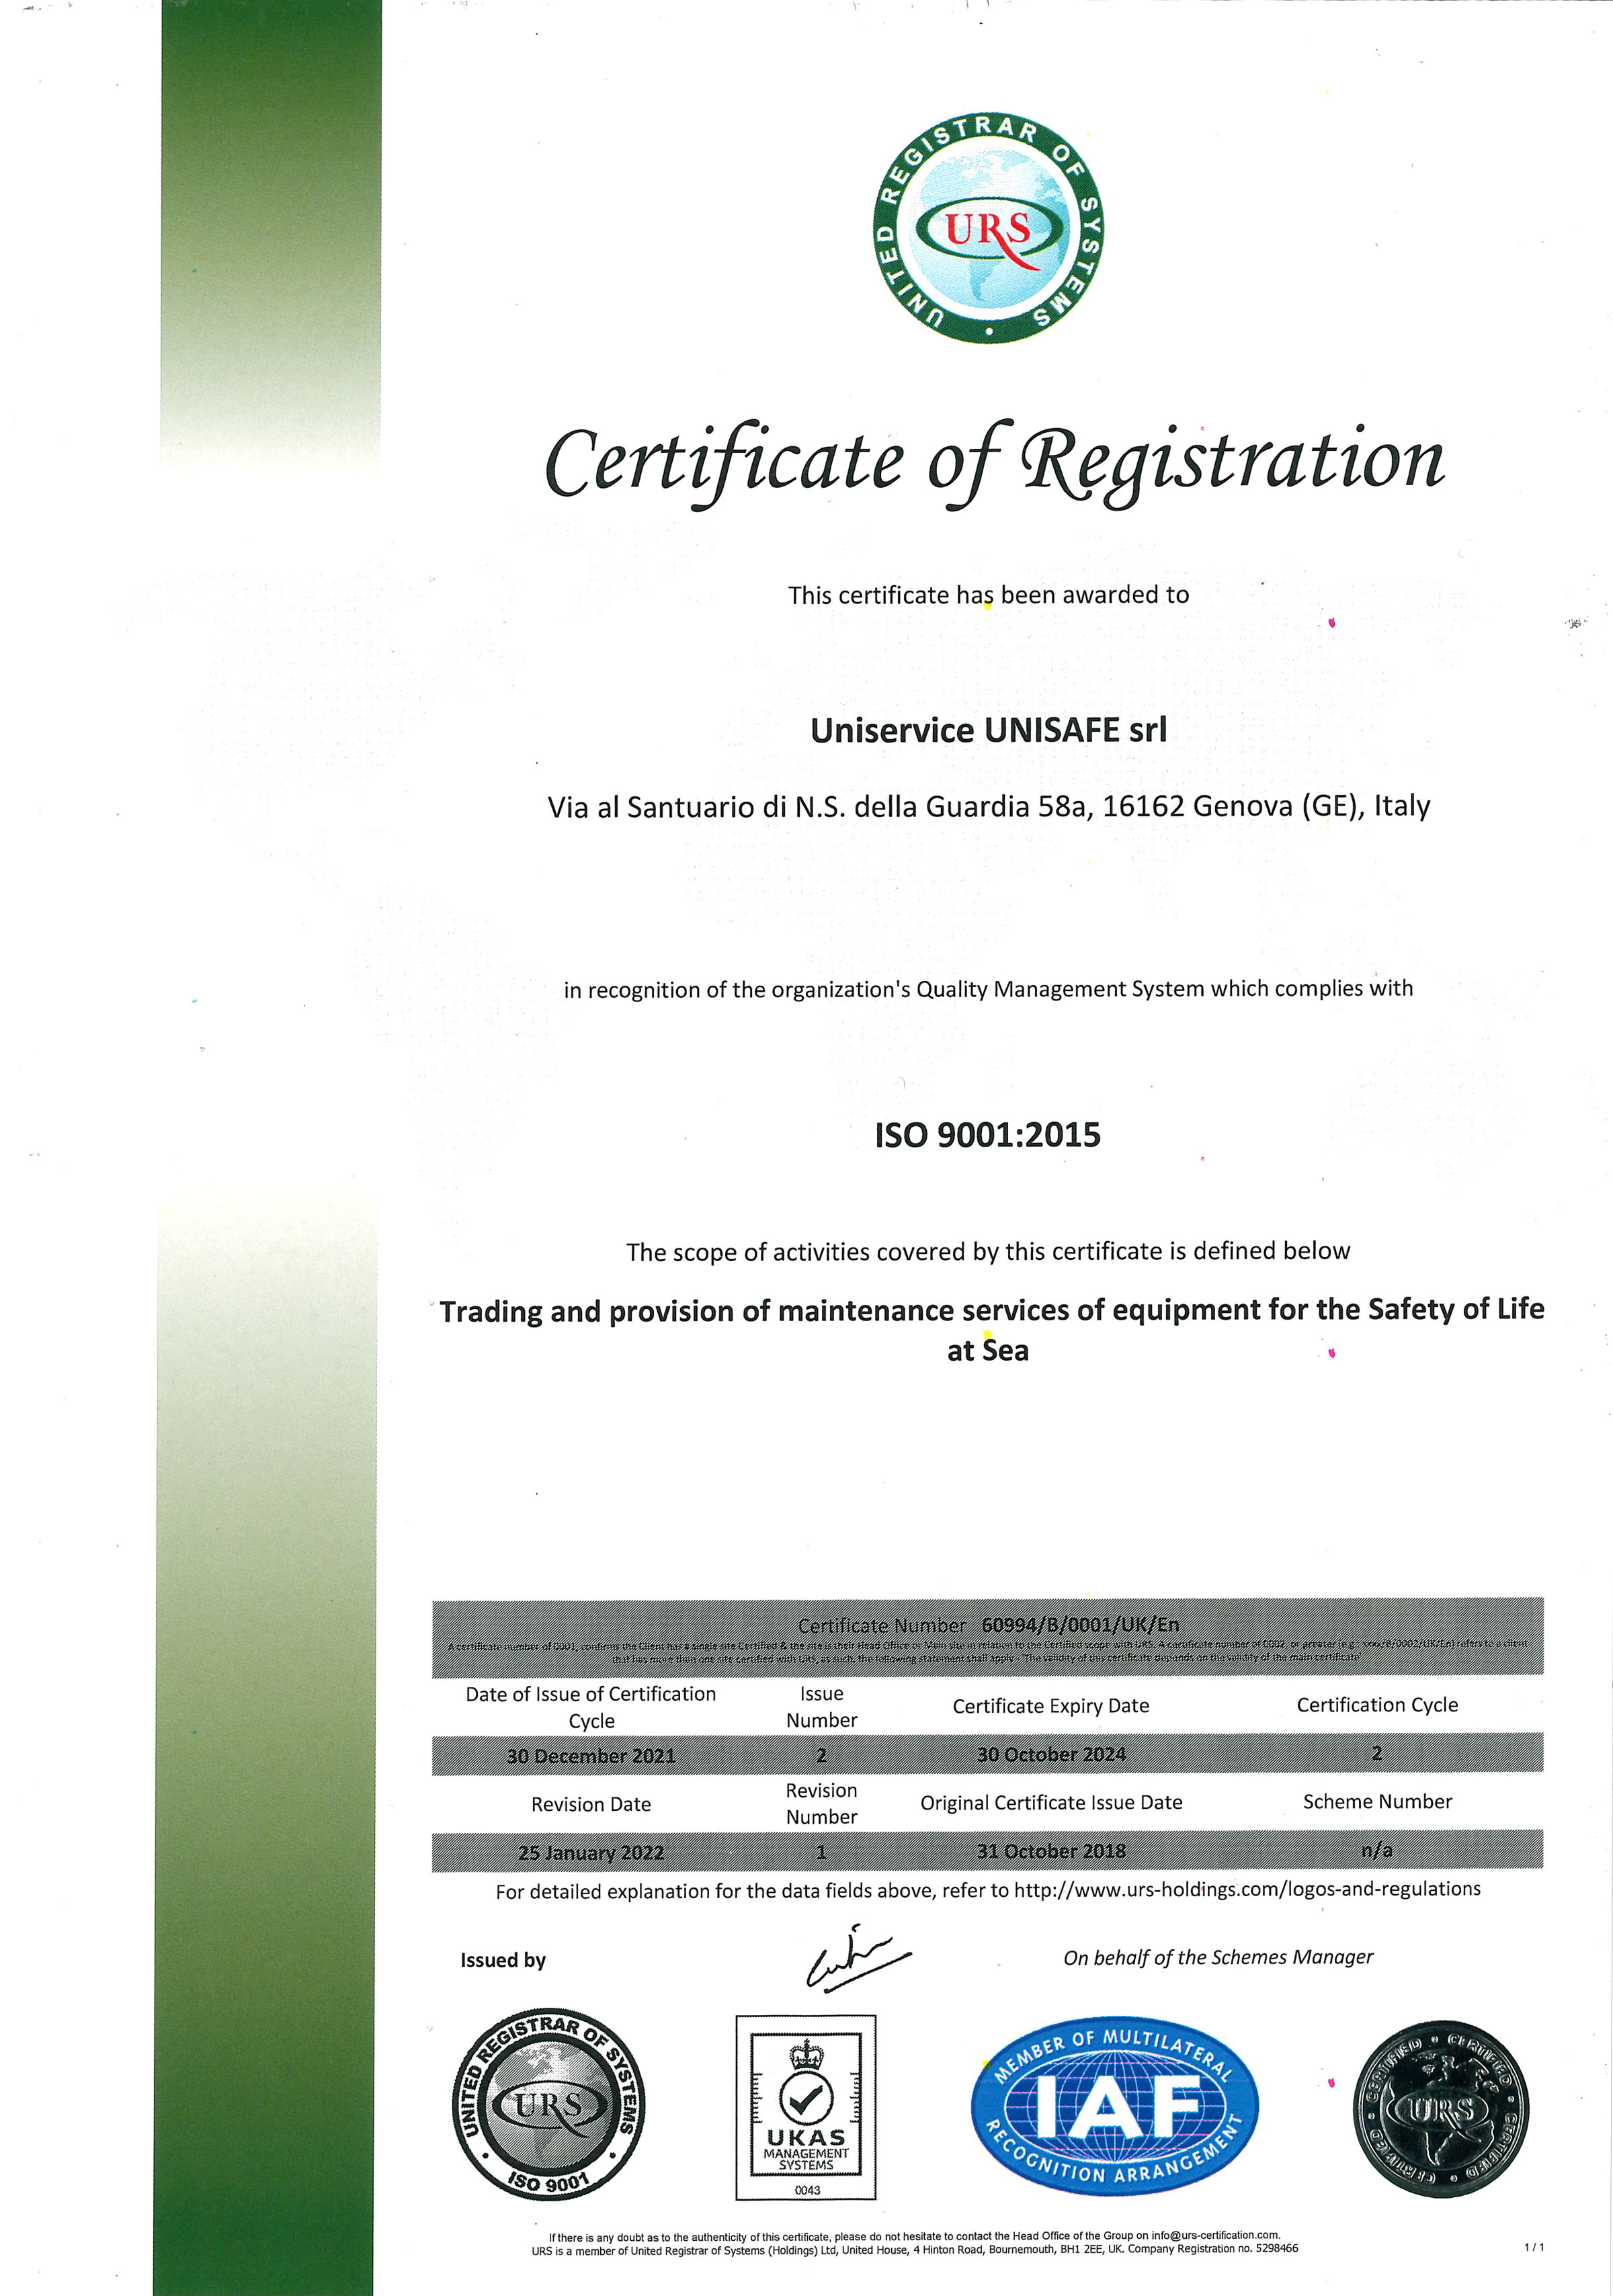 URS ISO 9001:2015 Certificate